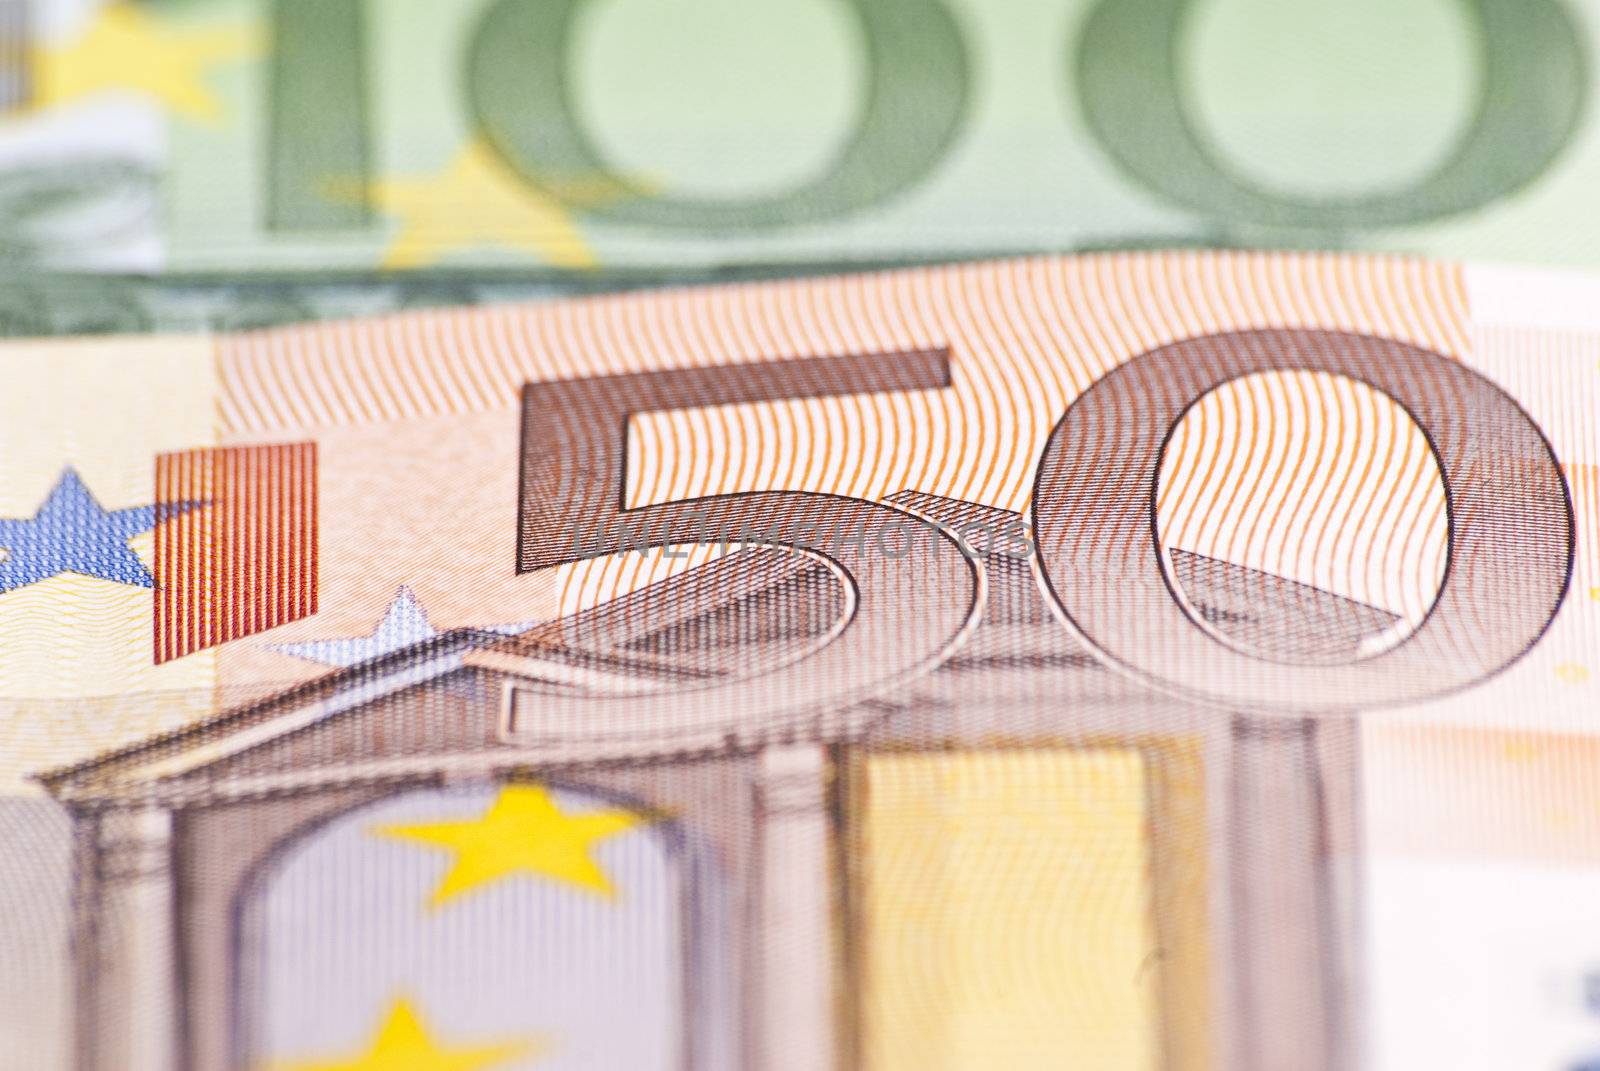 50 Euro Money Banknote In Macro